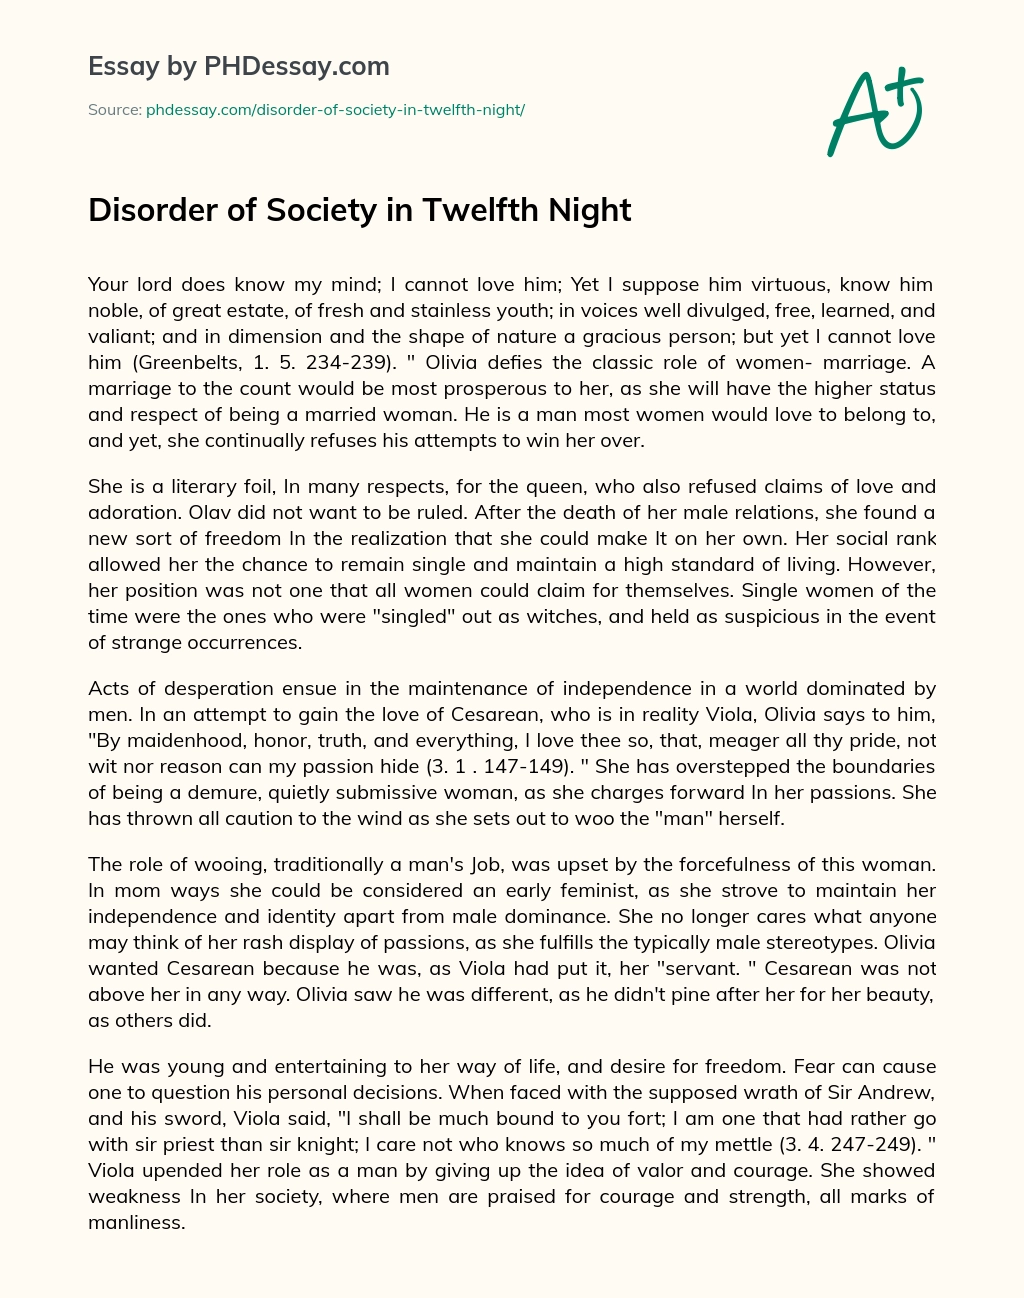 Disorder of Society in Twelfth Night essay